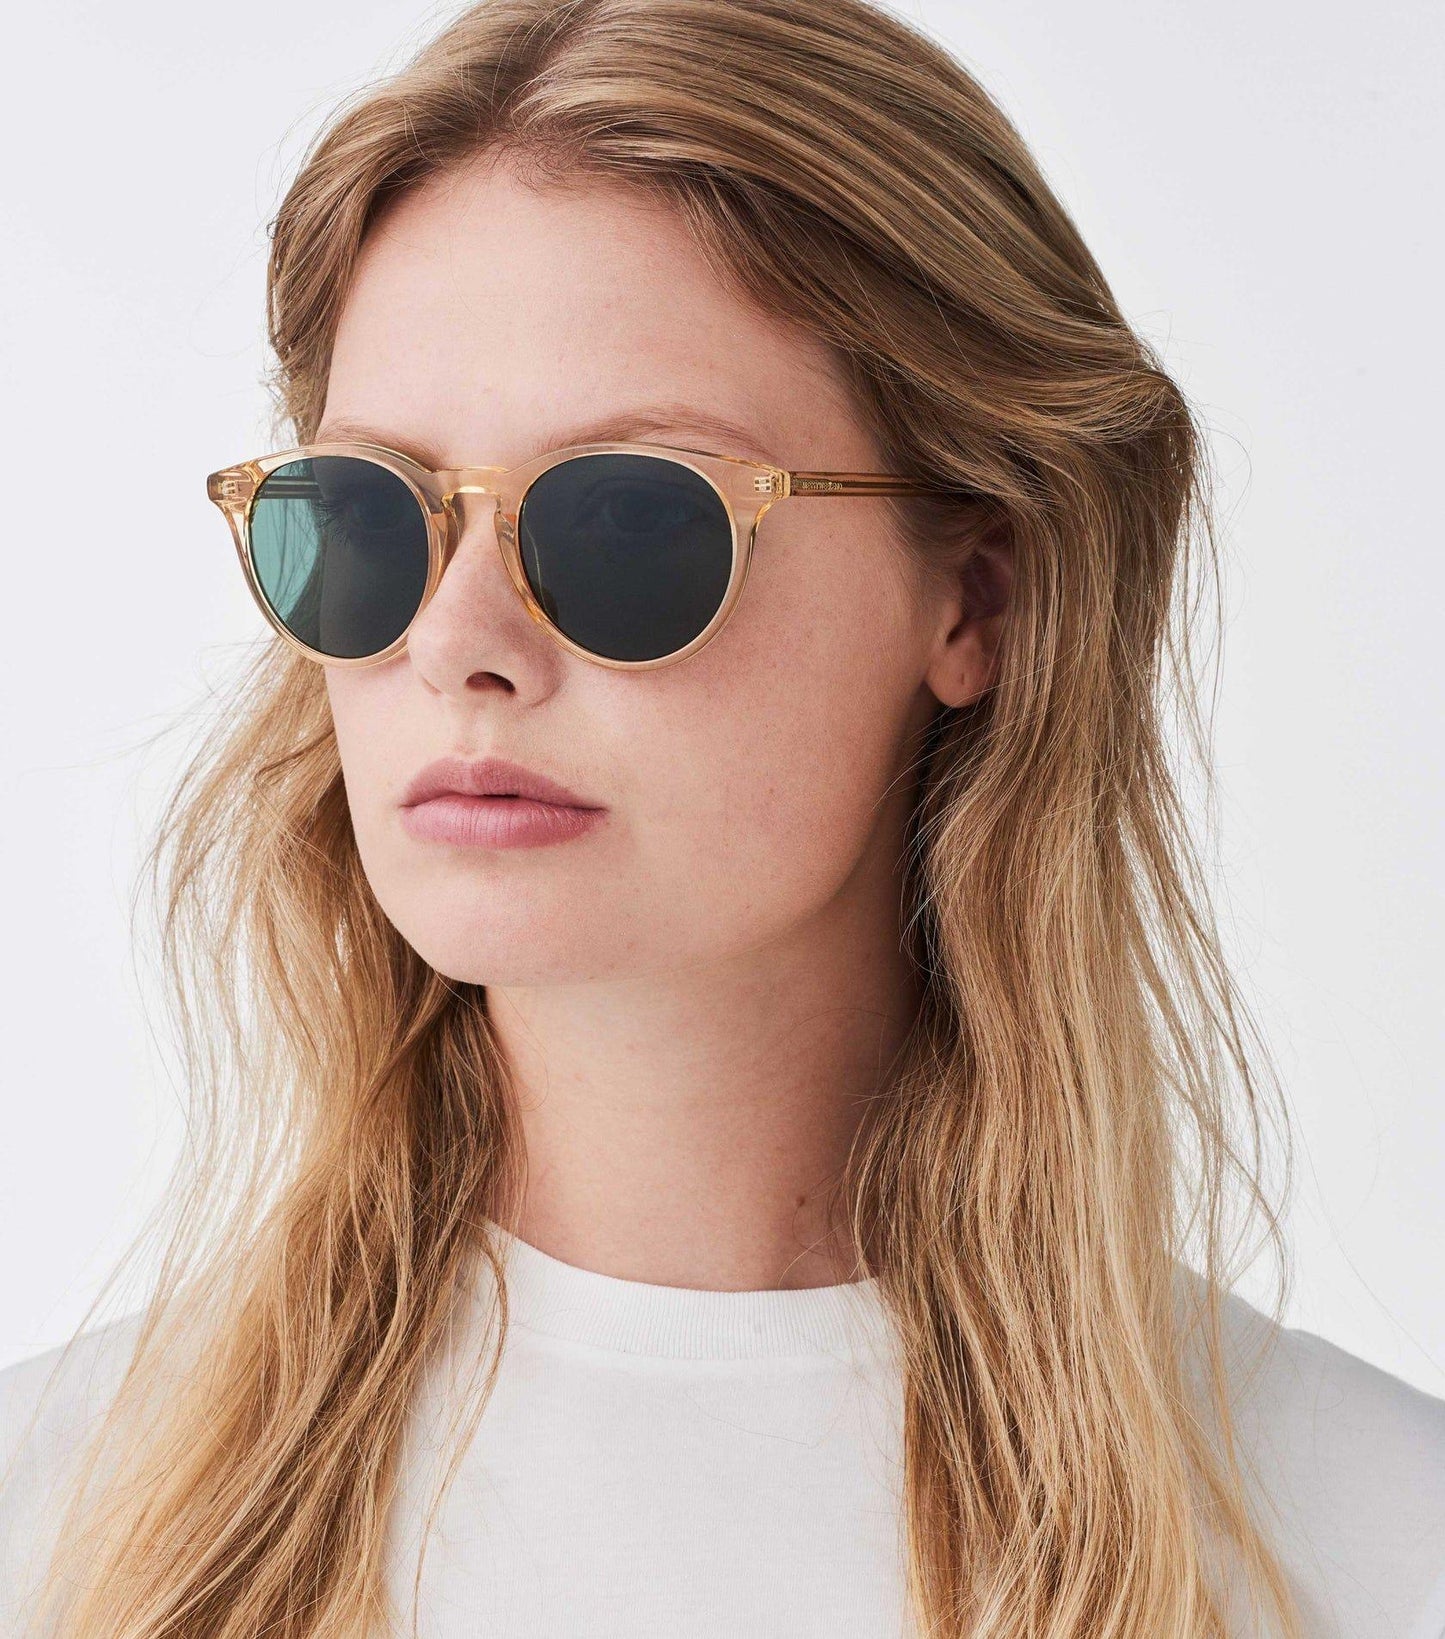 New-depp, Round sunglasses for men and women green lens UV400 protection